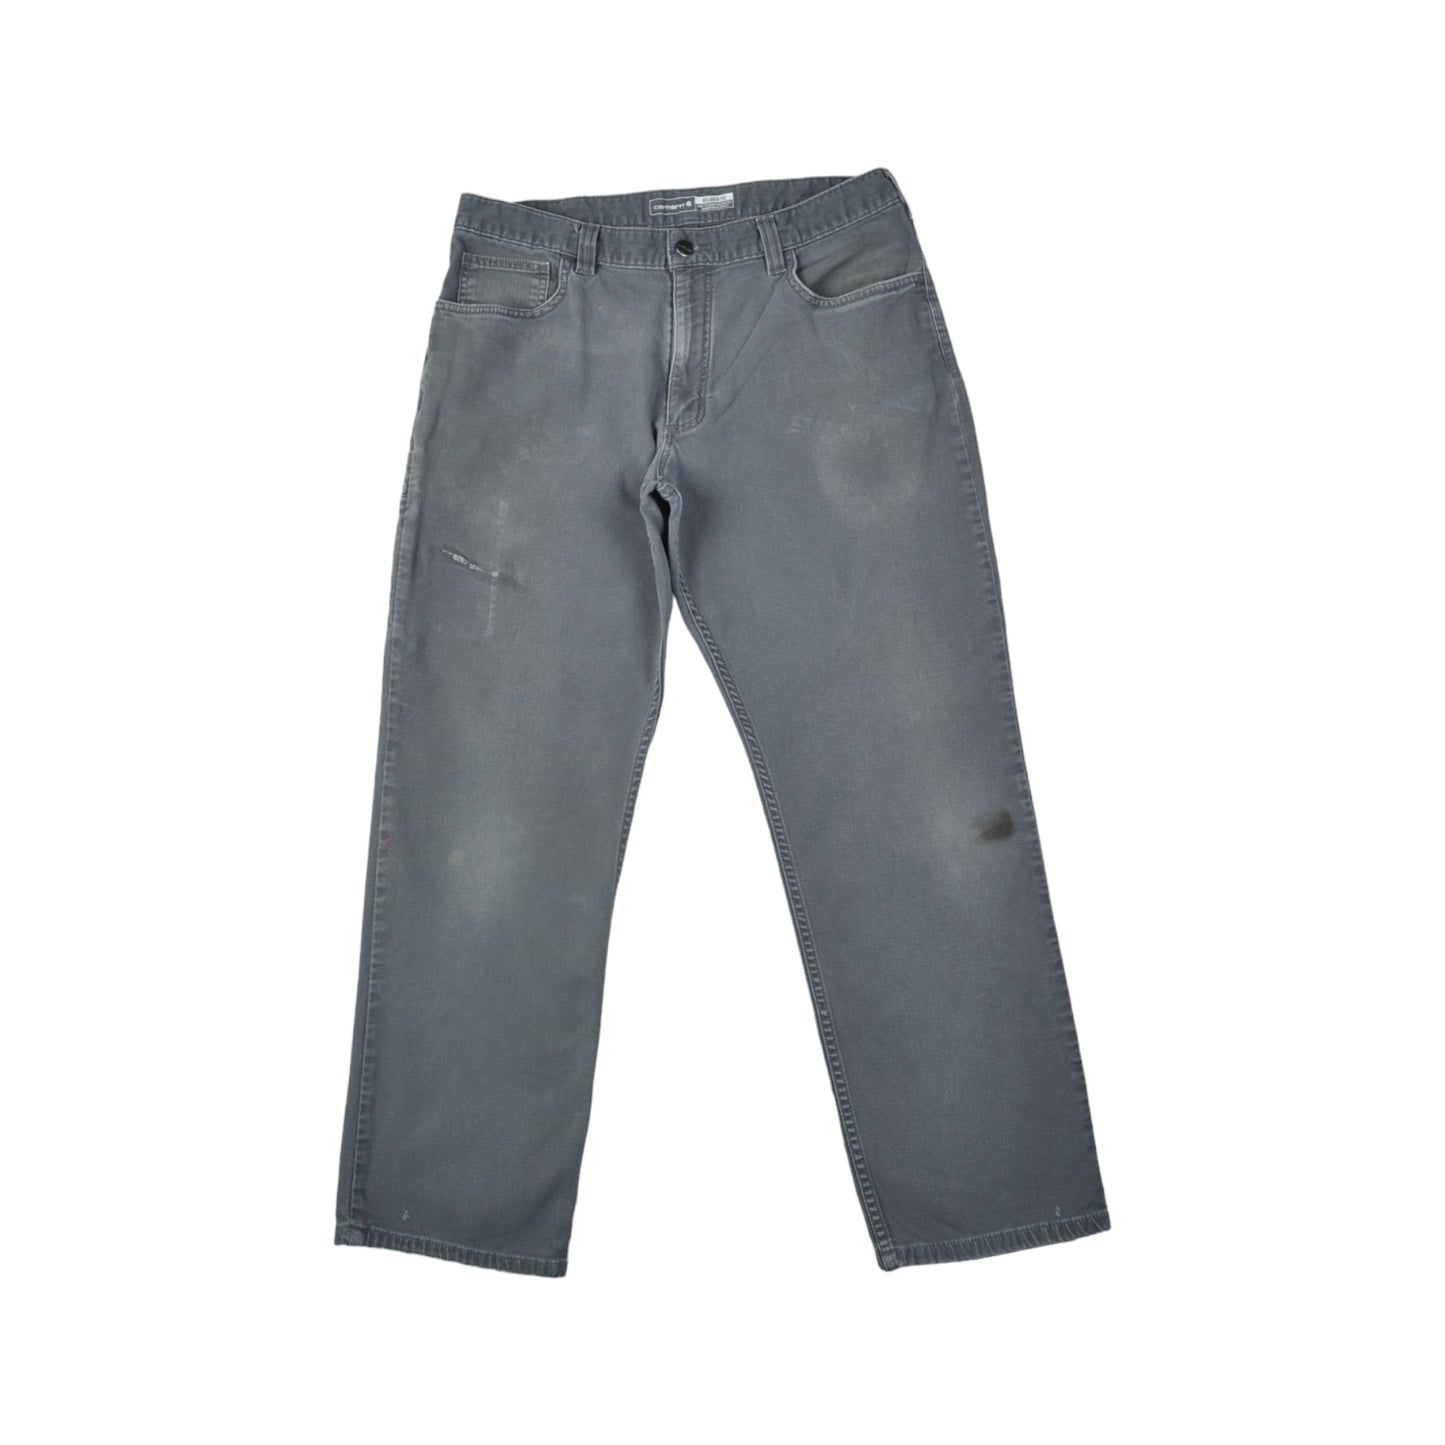 Vintage Carhartt Carpenter Pants Grey W36 L30